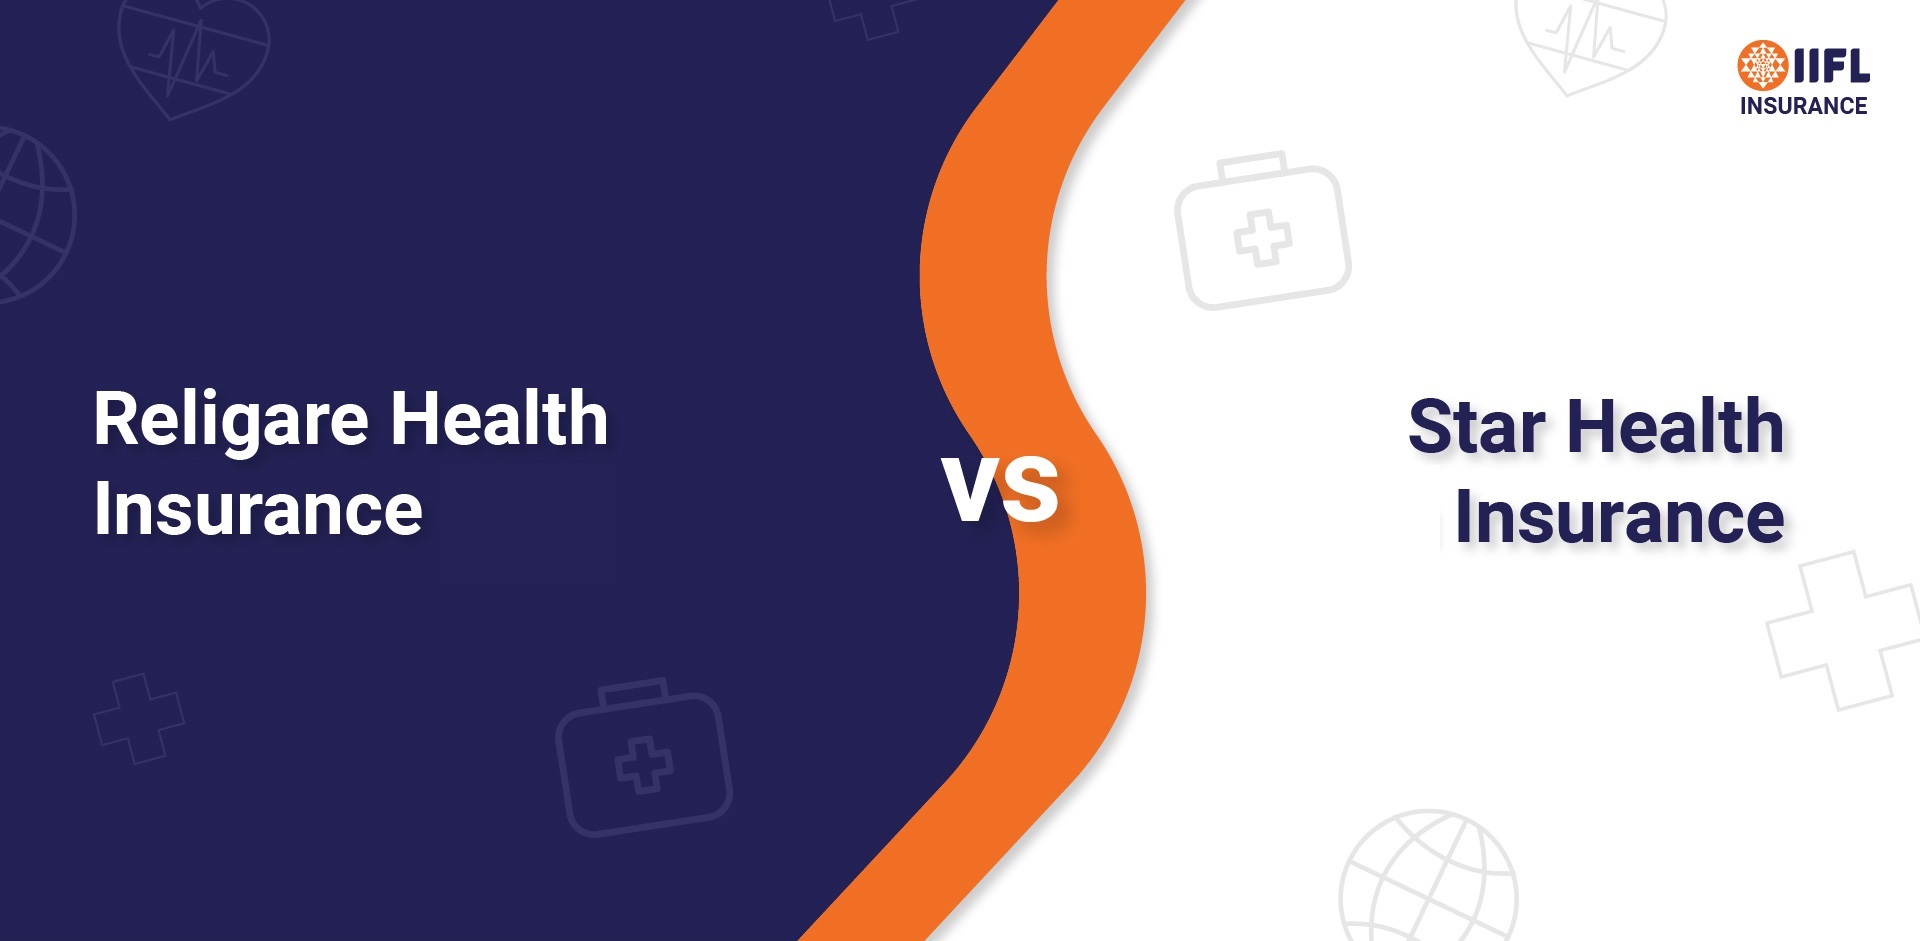 Star Health Insurance vs Care (Religare) Health Insurance